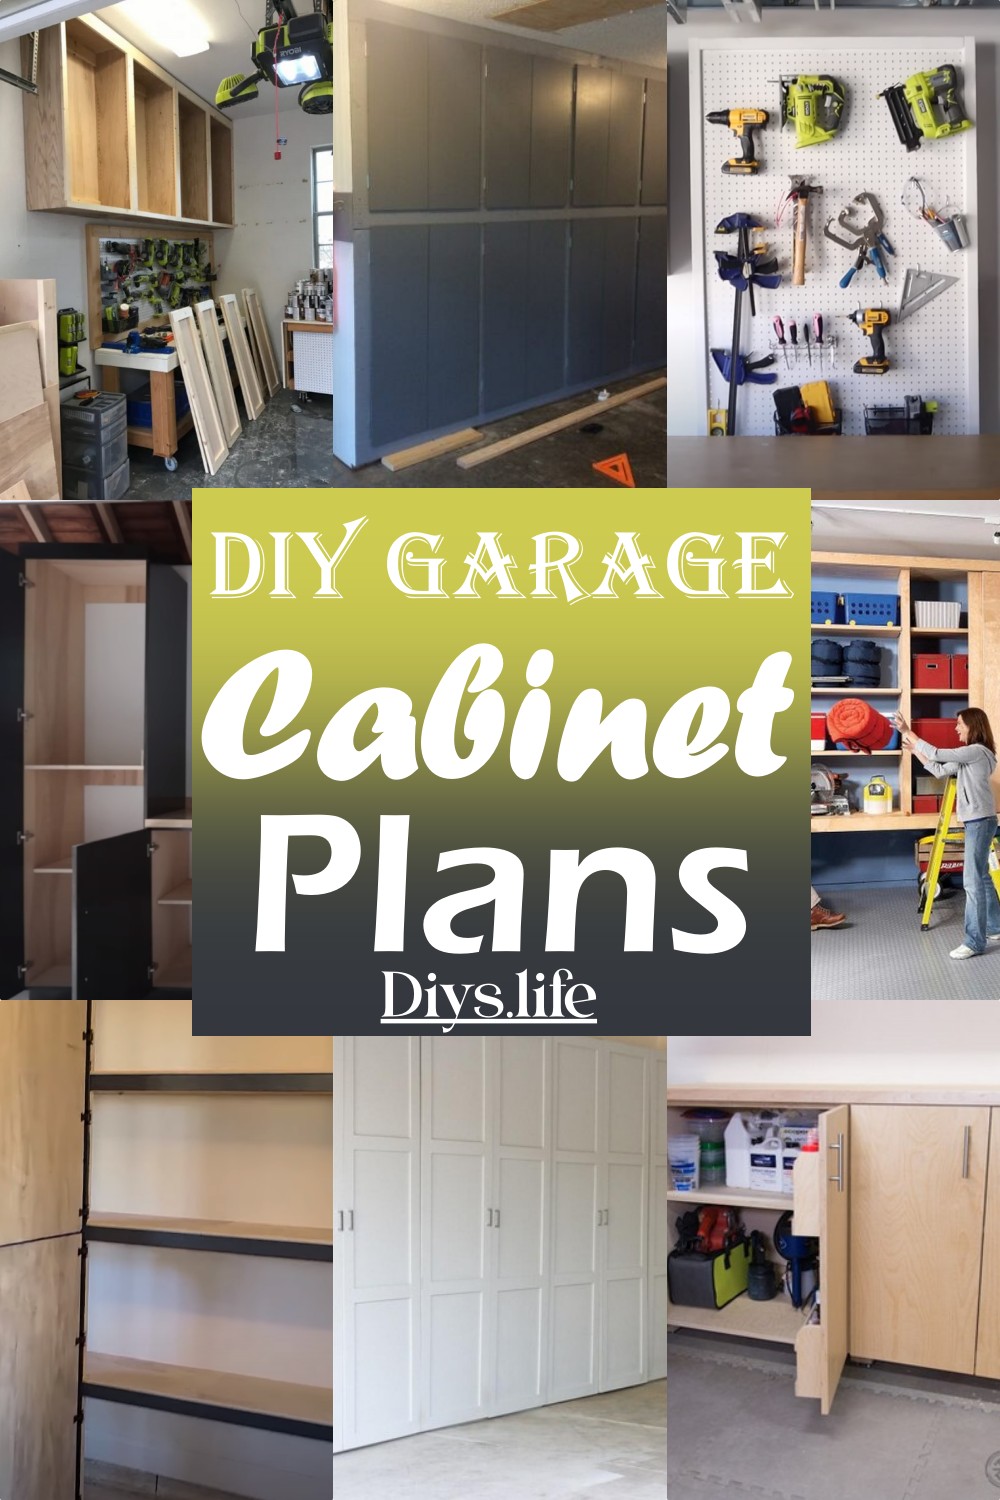 20 DIY Garage Cabinet Plans For Storage And Organization - DIYS